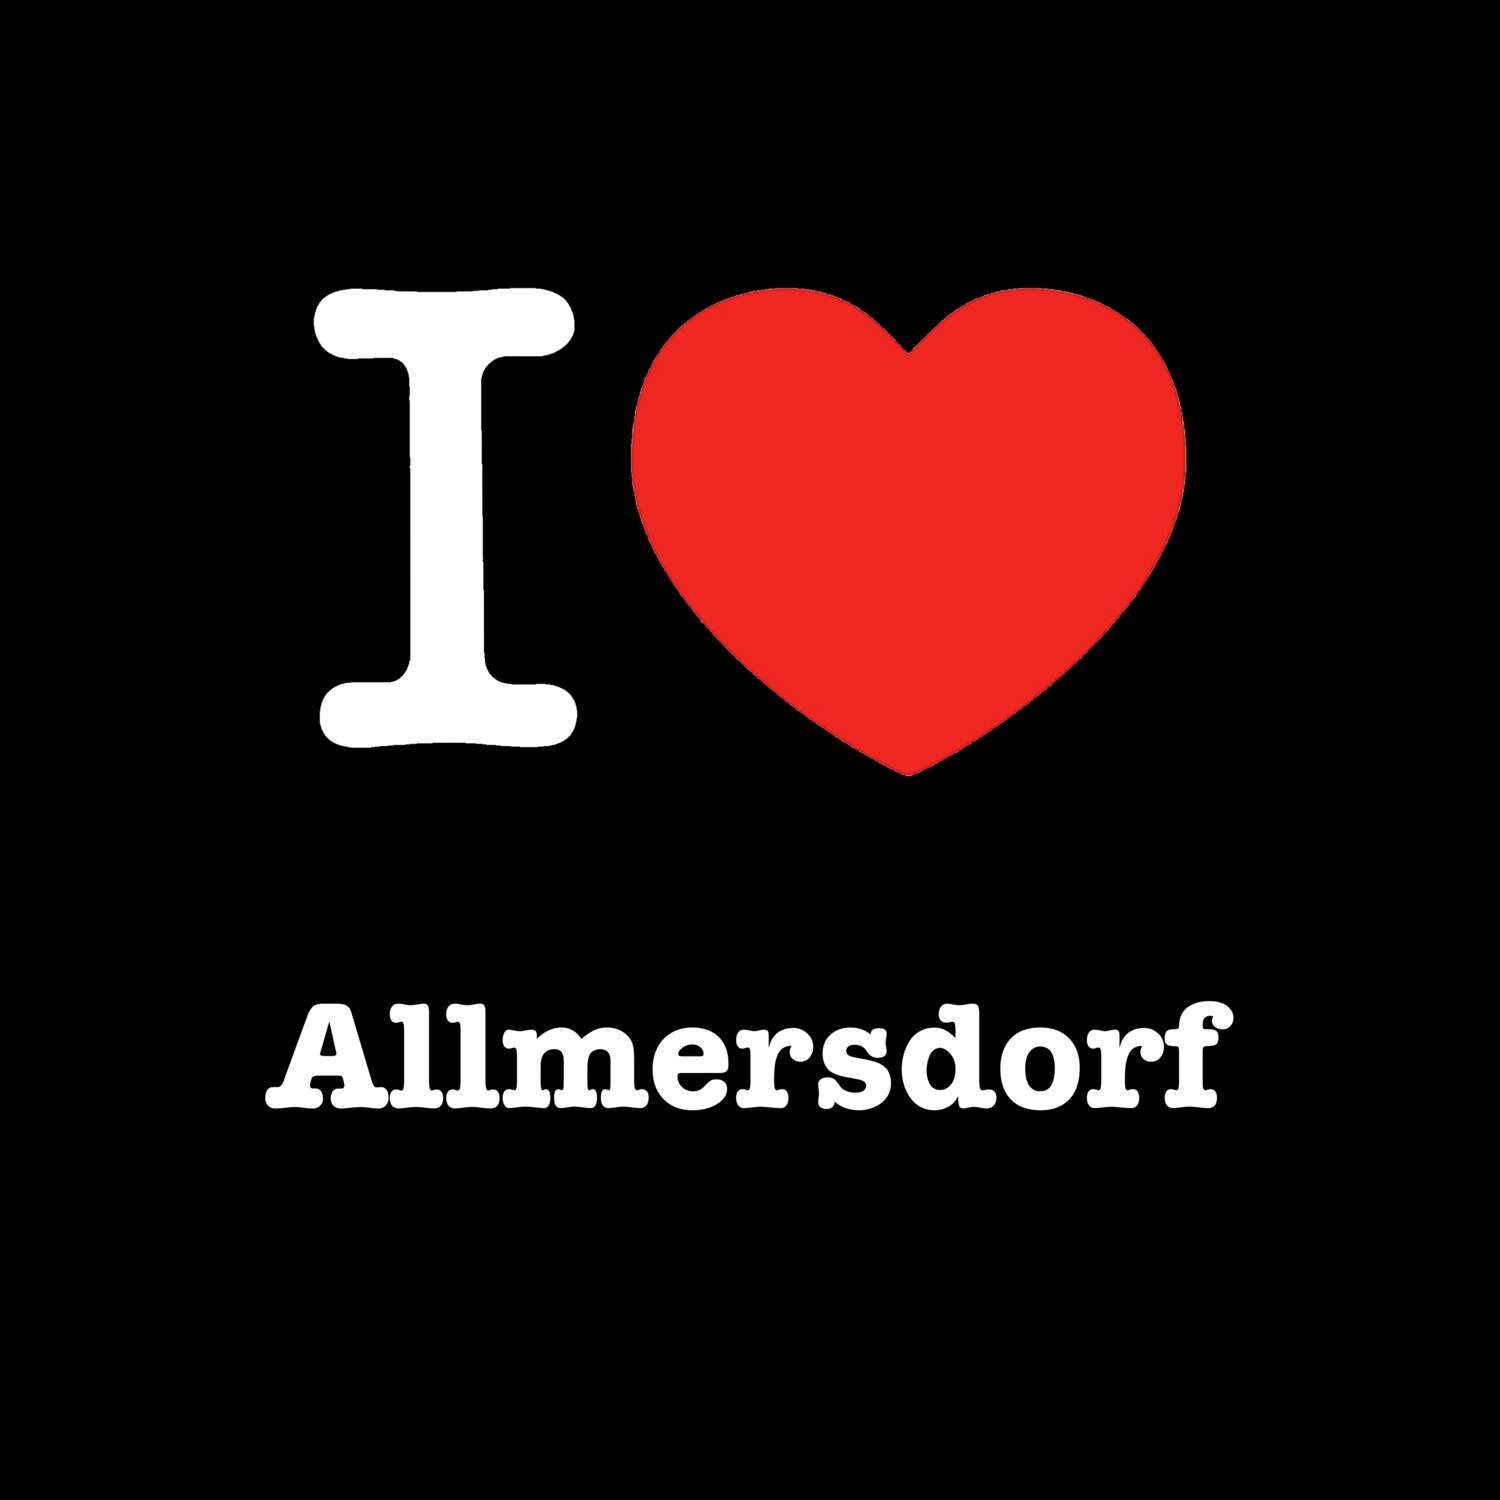 Allmersdorf T-Shirt »I love«